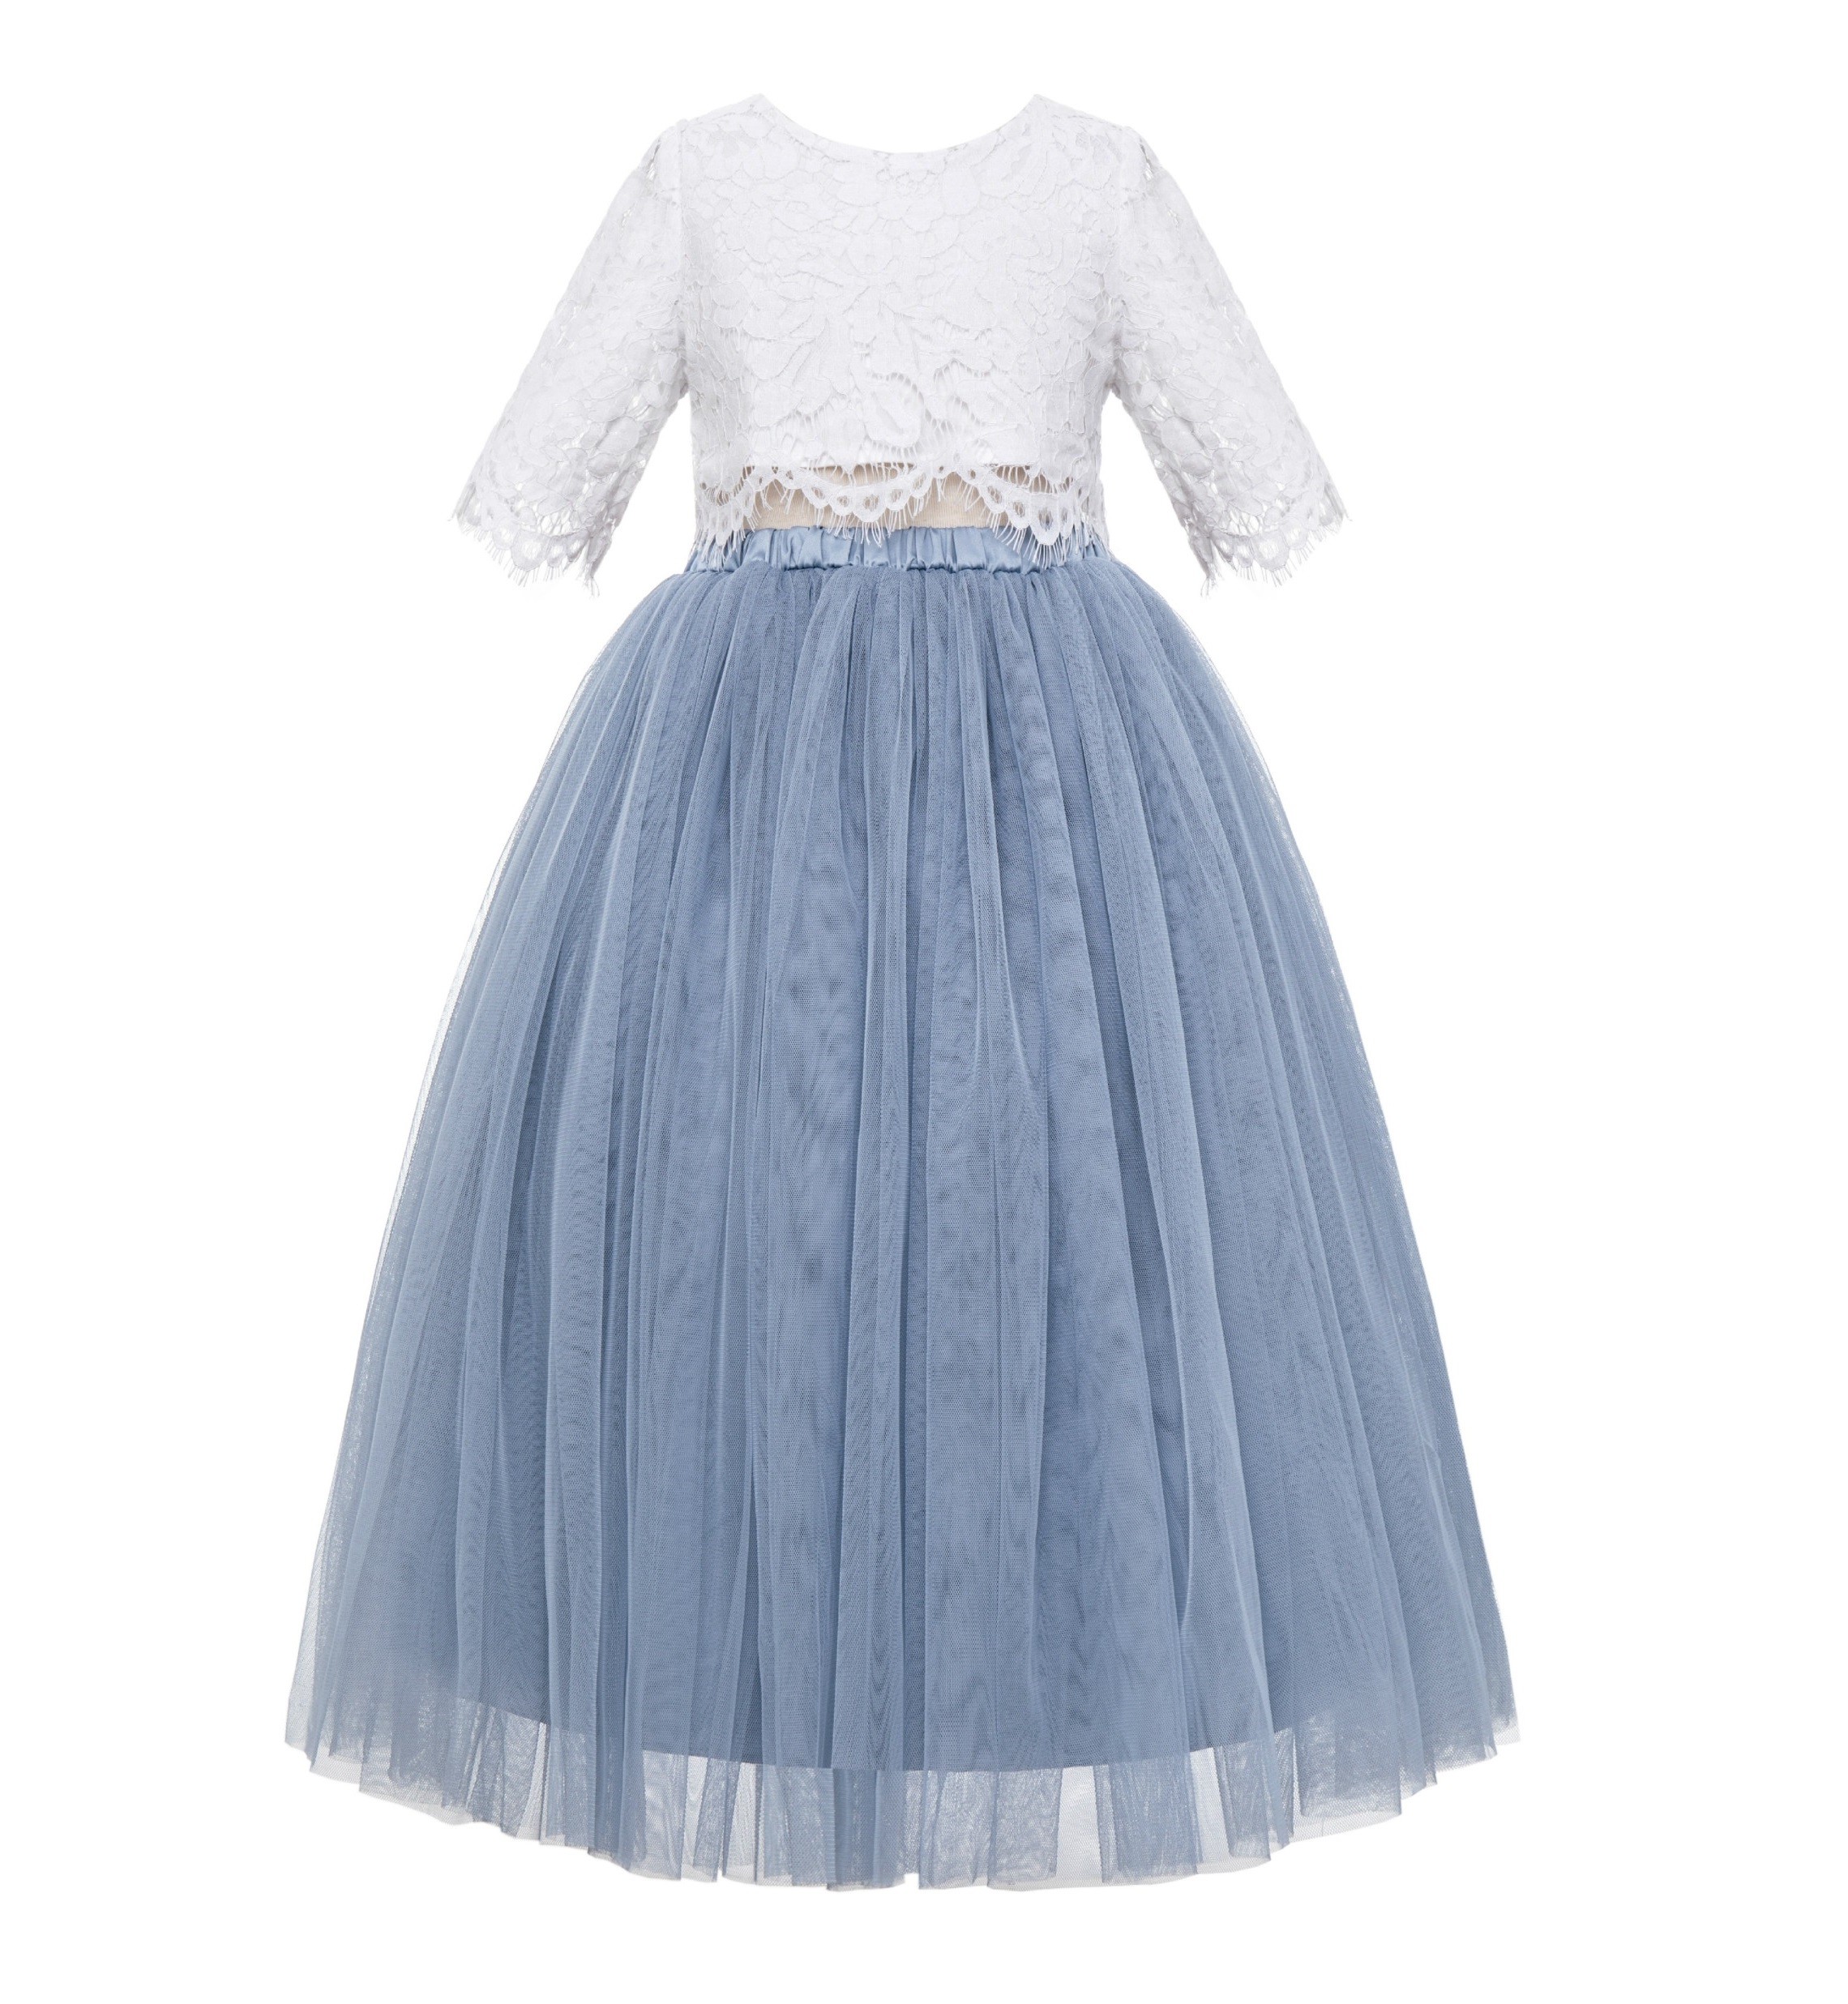 Dusty Blue Eyelash Lace Flower Girl Dress A-Line Tulle Dress LG5